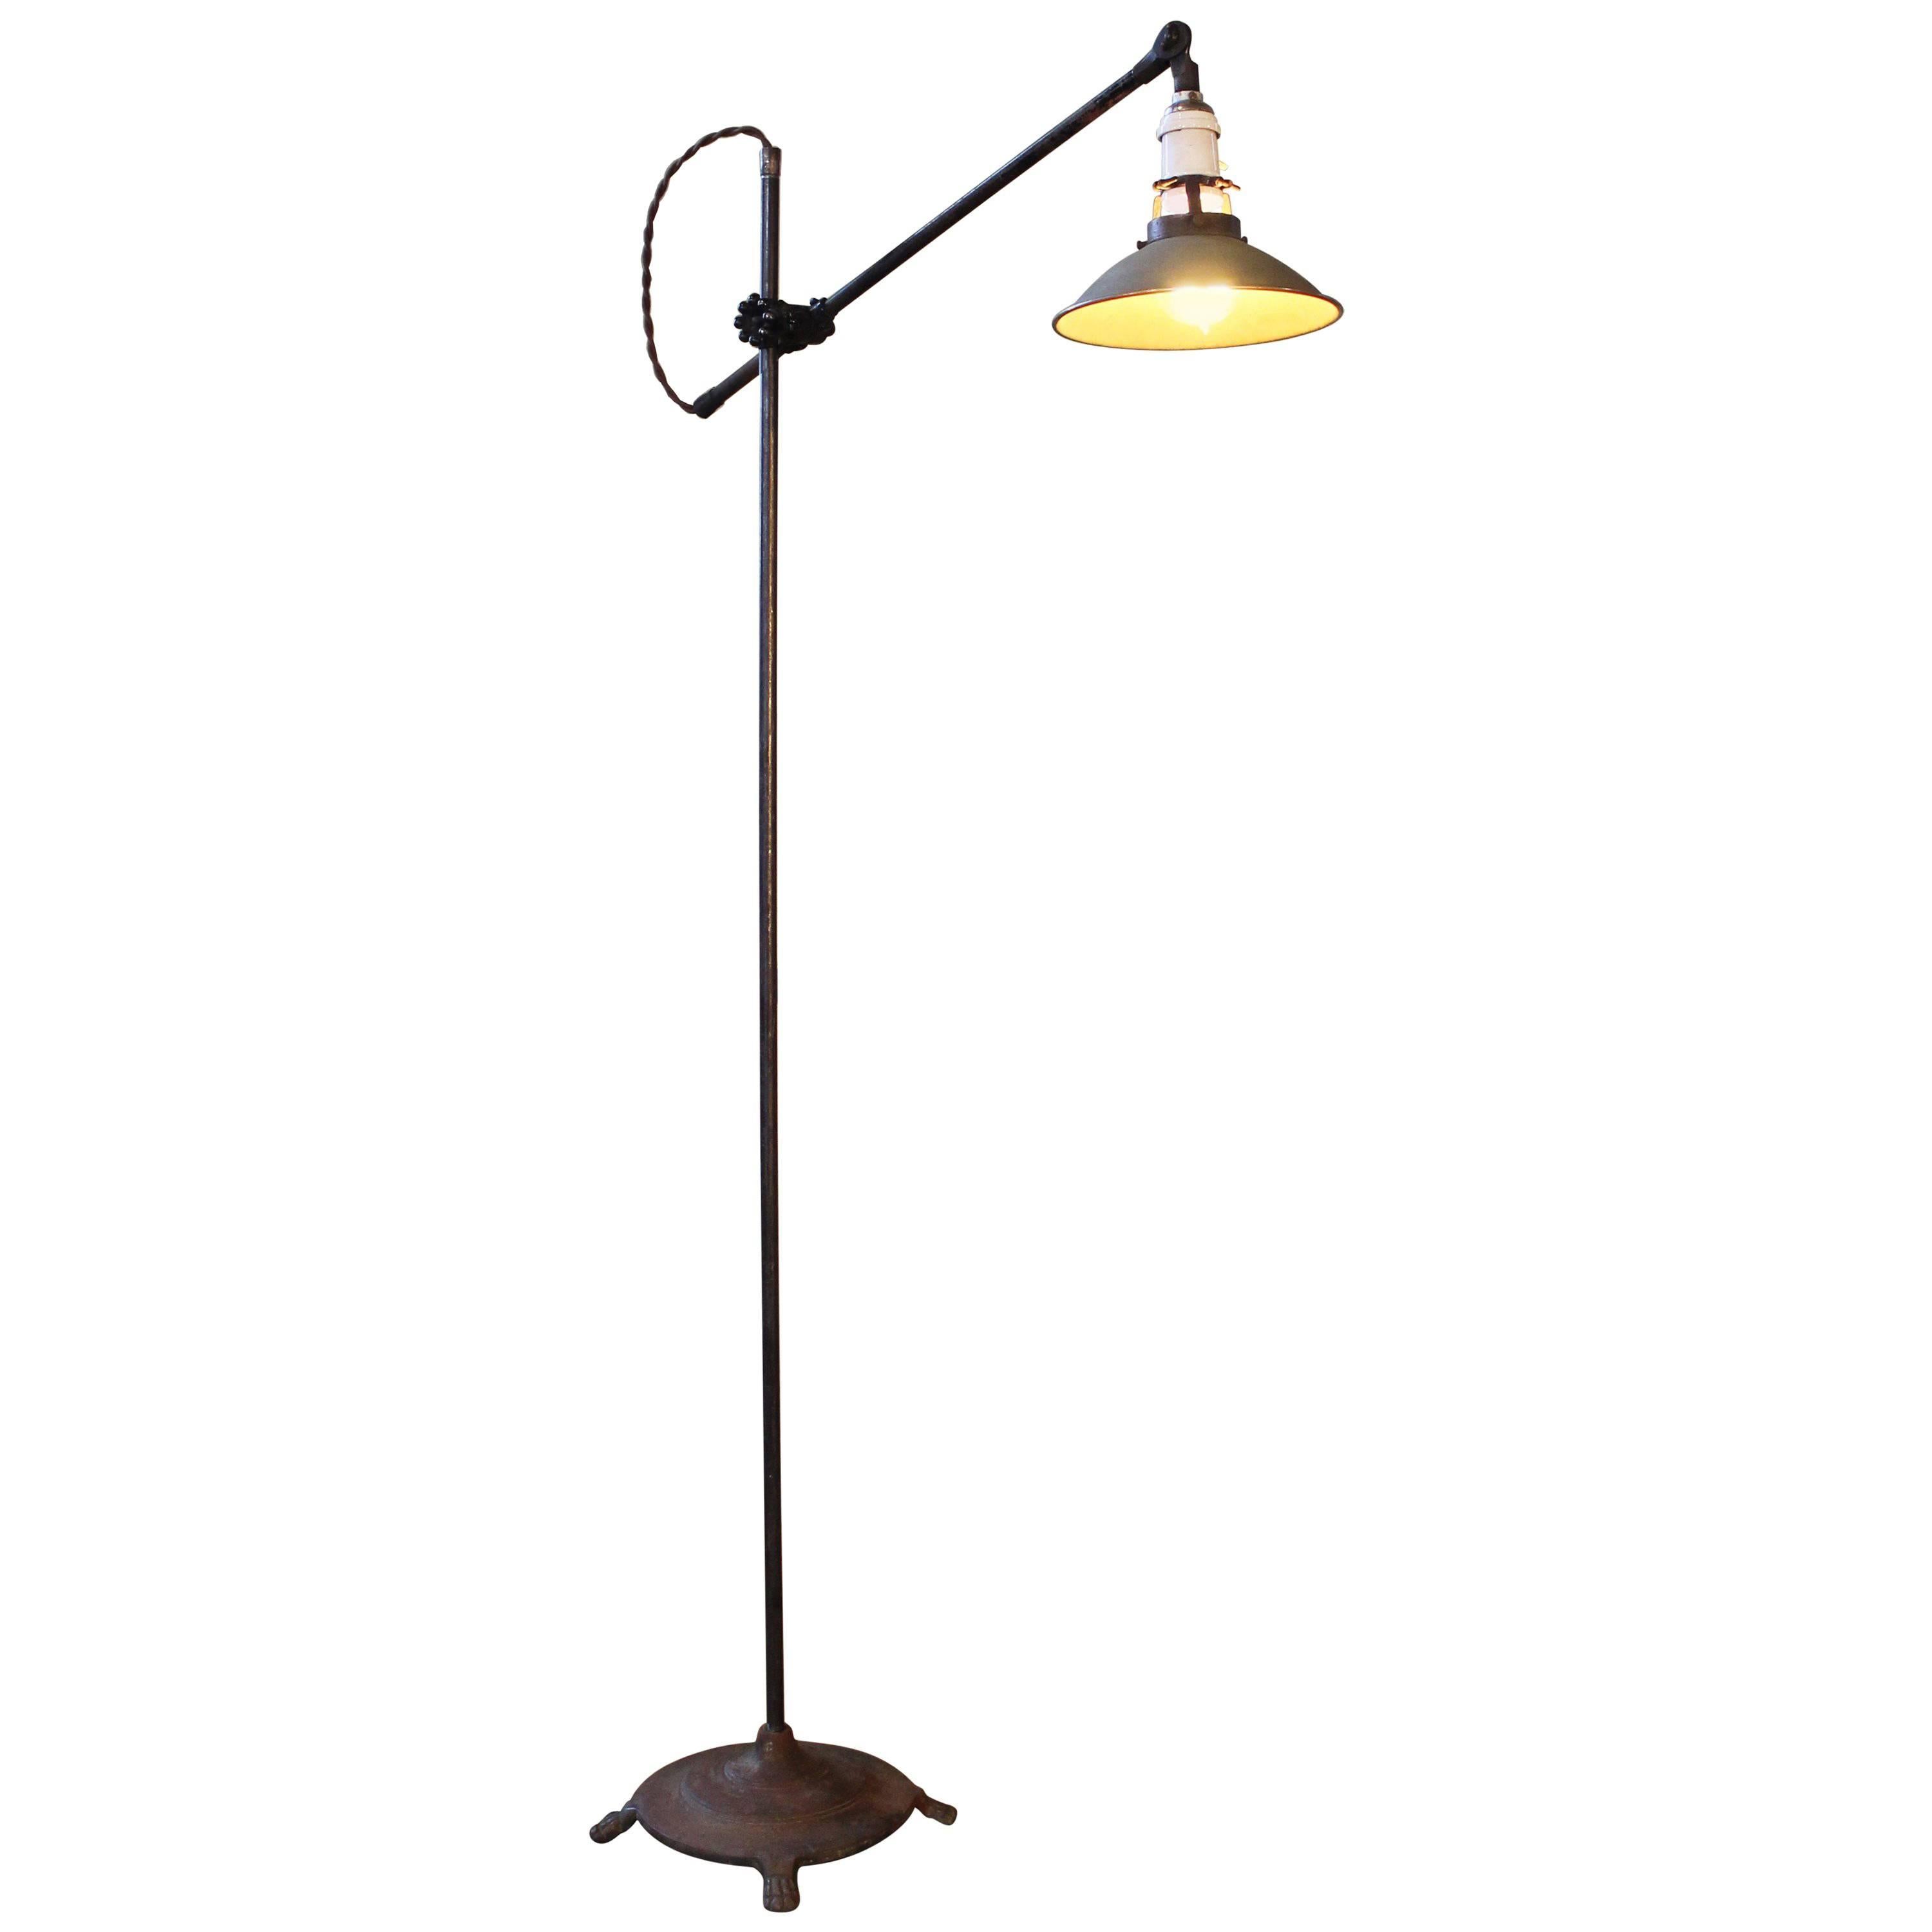 Floor Lamp, Light Vintage Shop Iron Steel Adjustable Reading Task with Claw Foot